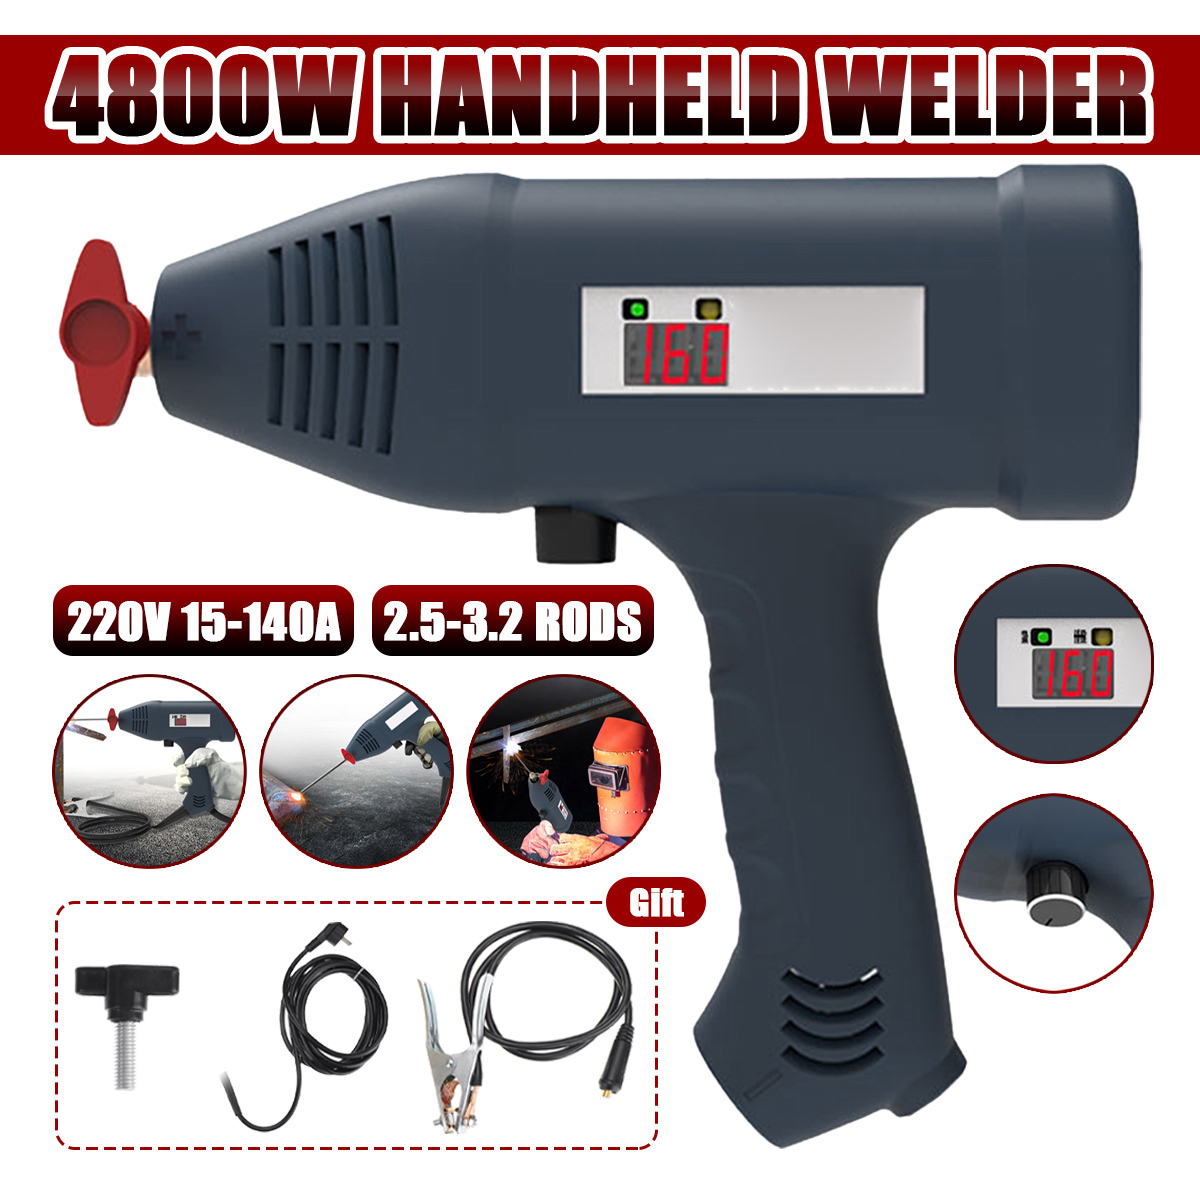 4800W-220V-Digital-Autamatic-Welding-Machine-Handheld-Arc-Welding-Guns-Welder-Tool-0-160A-1890648-2